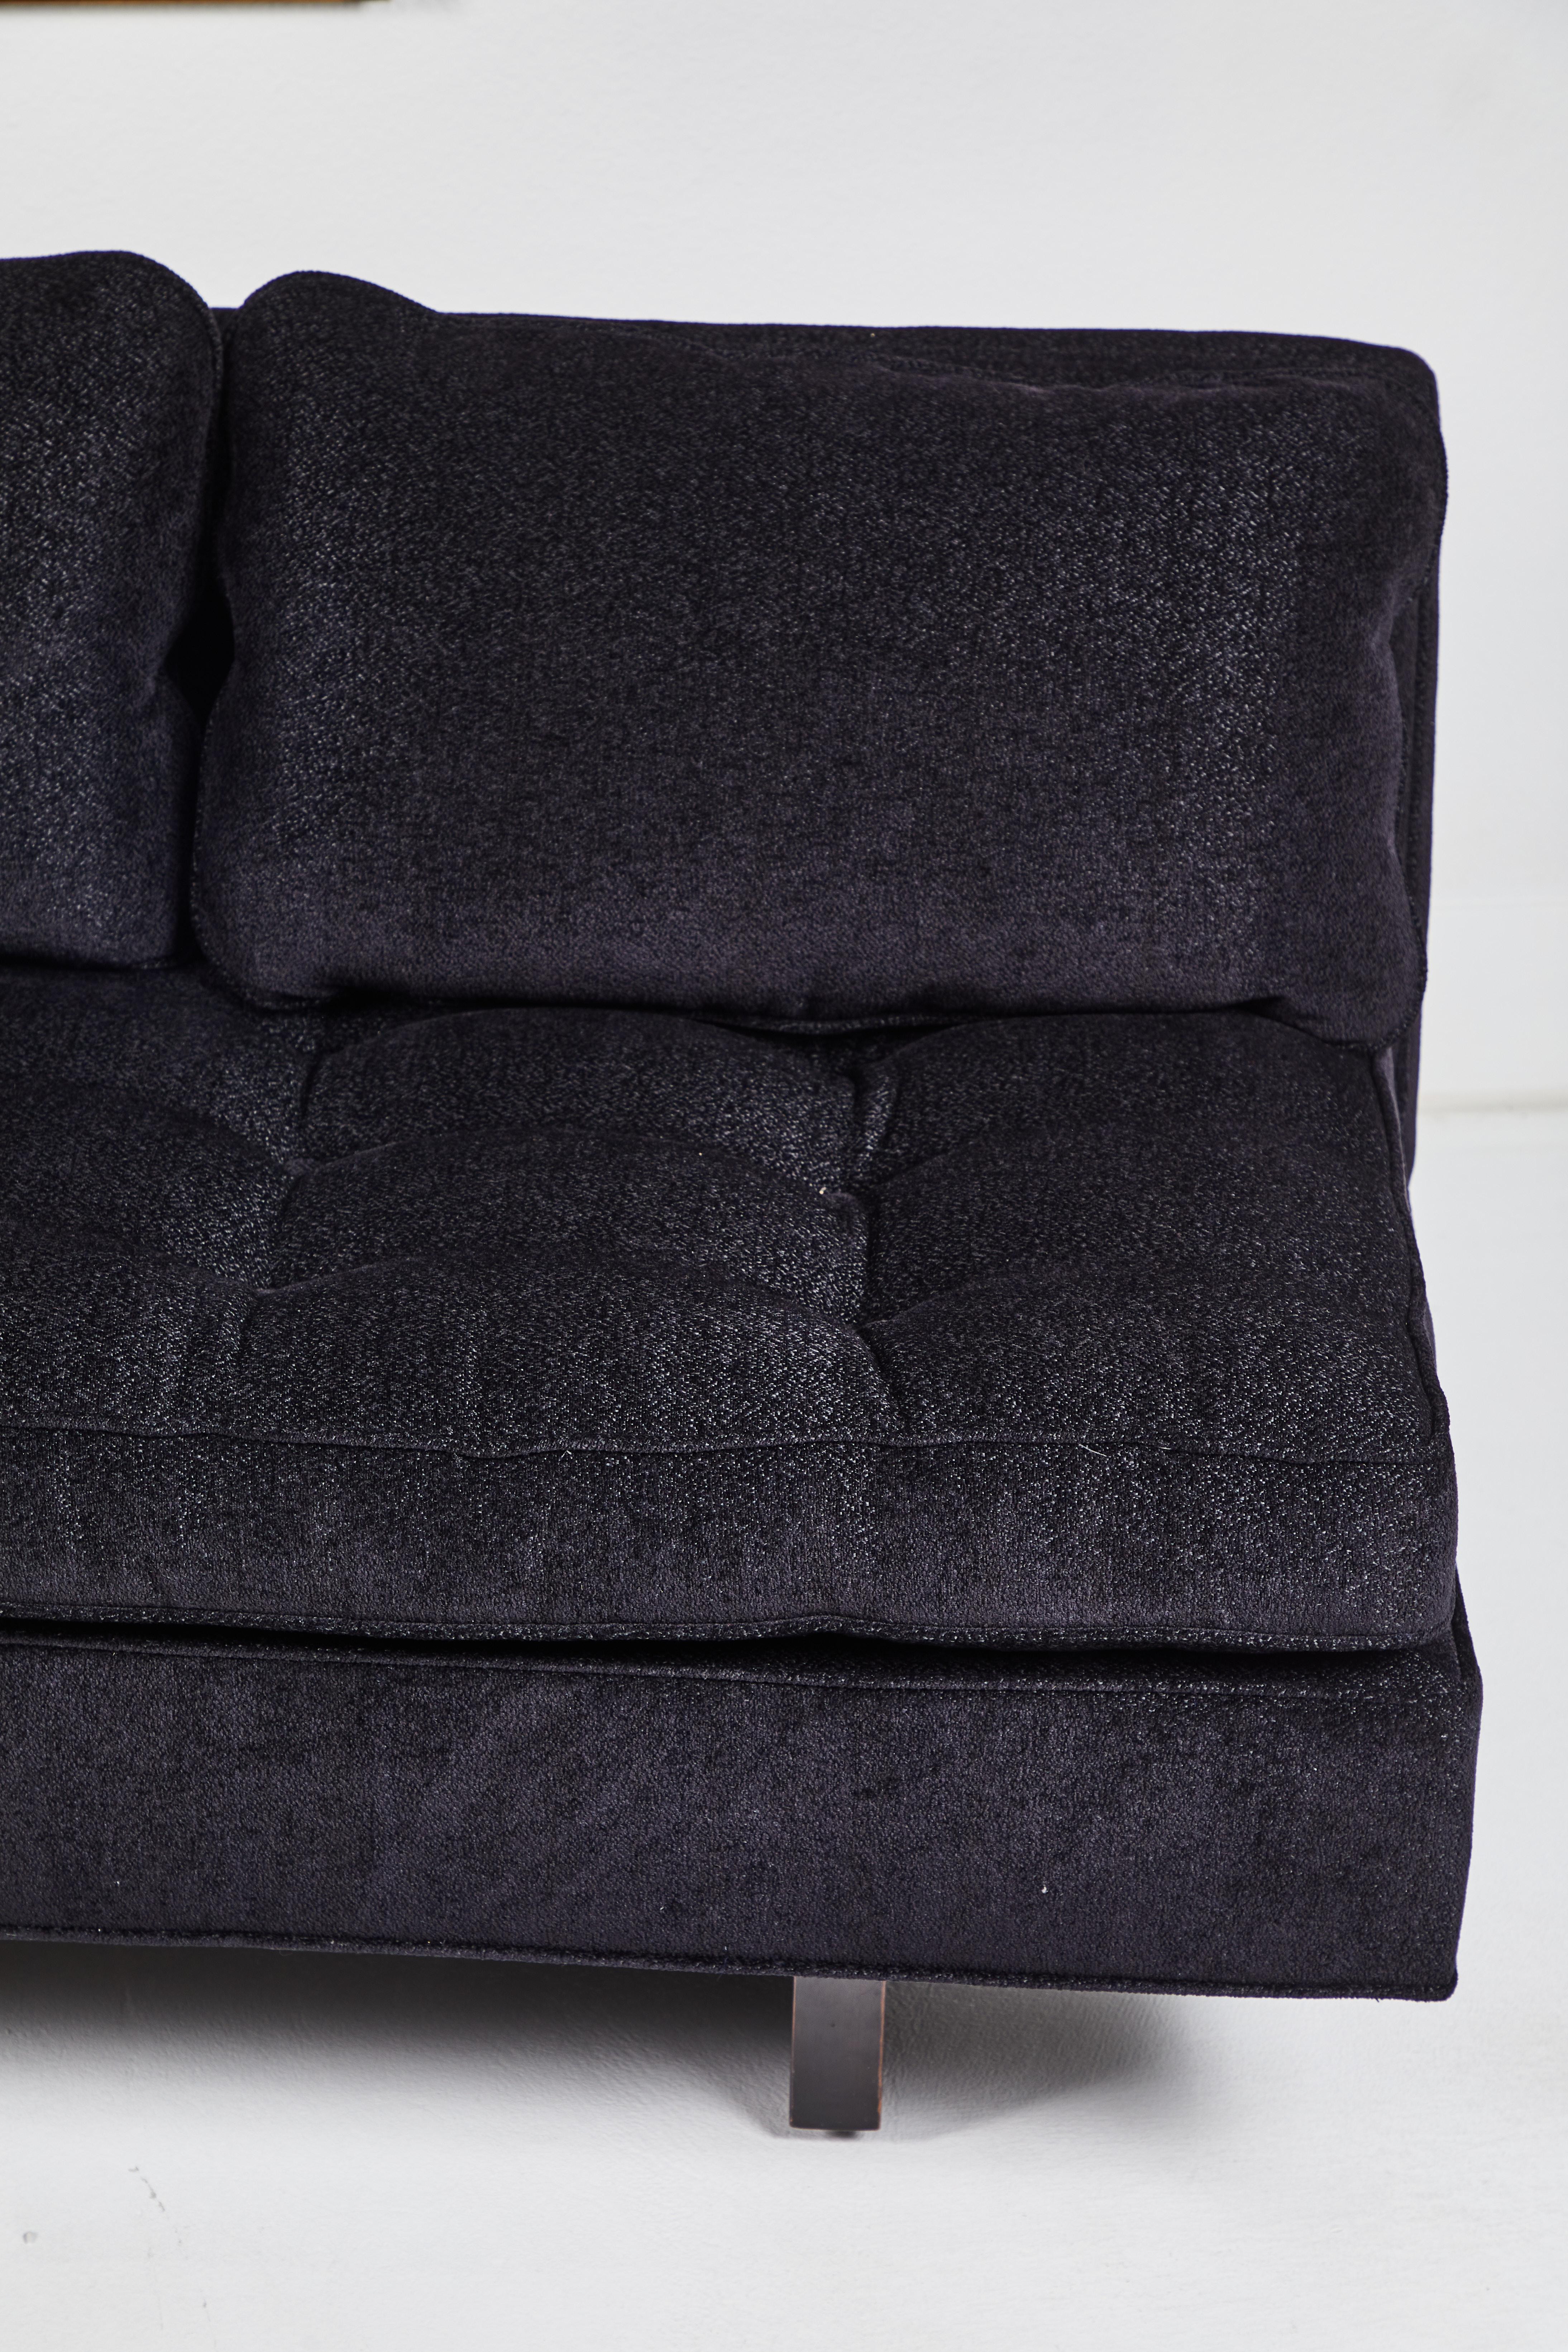 Mid-20th Century Dunbar Single Arm Sofa Designed by Edward Wormley For Sale